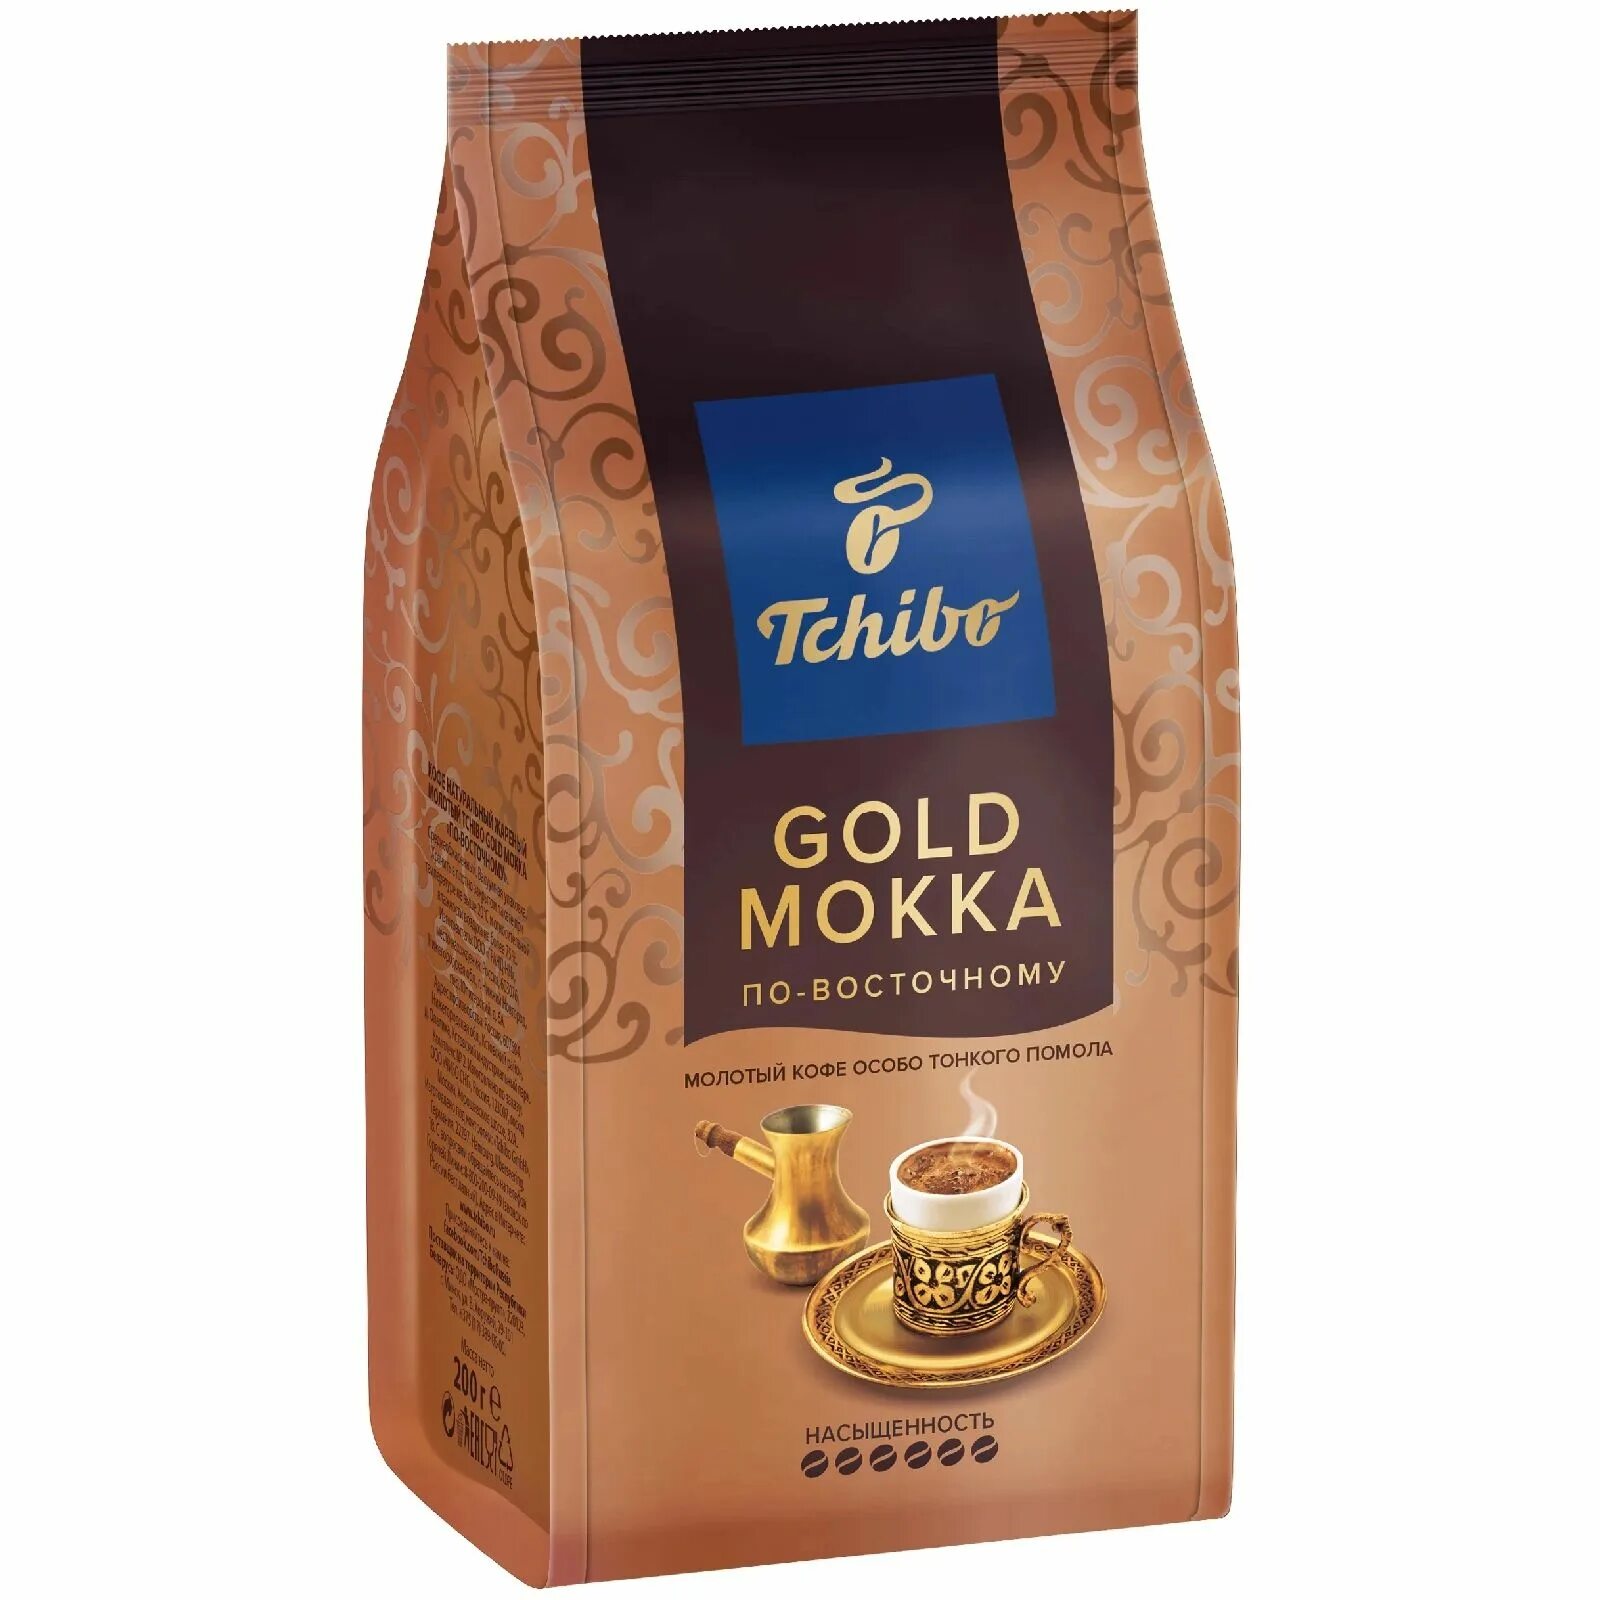 Tchibo gold. Кофе Tchibo Gold Mokka. Кофе Tchibo Gold Mokka 200 гр по восточному. Tchibo Gold Mokka по-восточному молотый. Кофе Tchibo Gold Mokka 100.